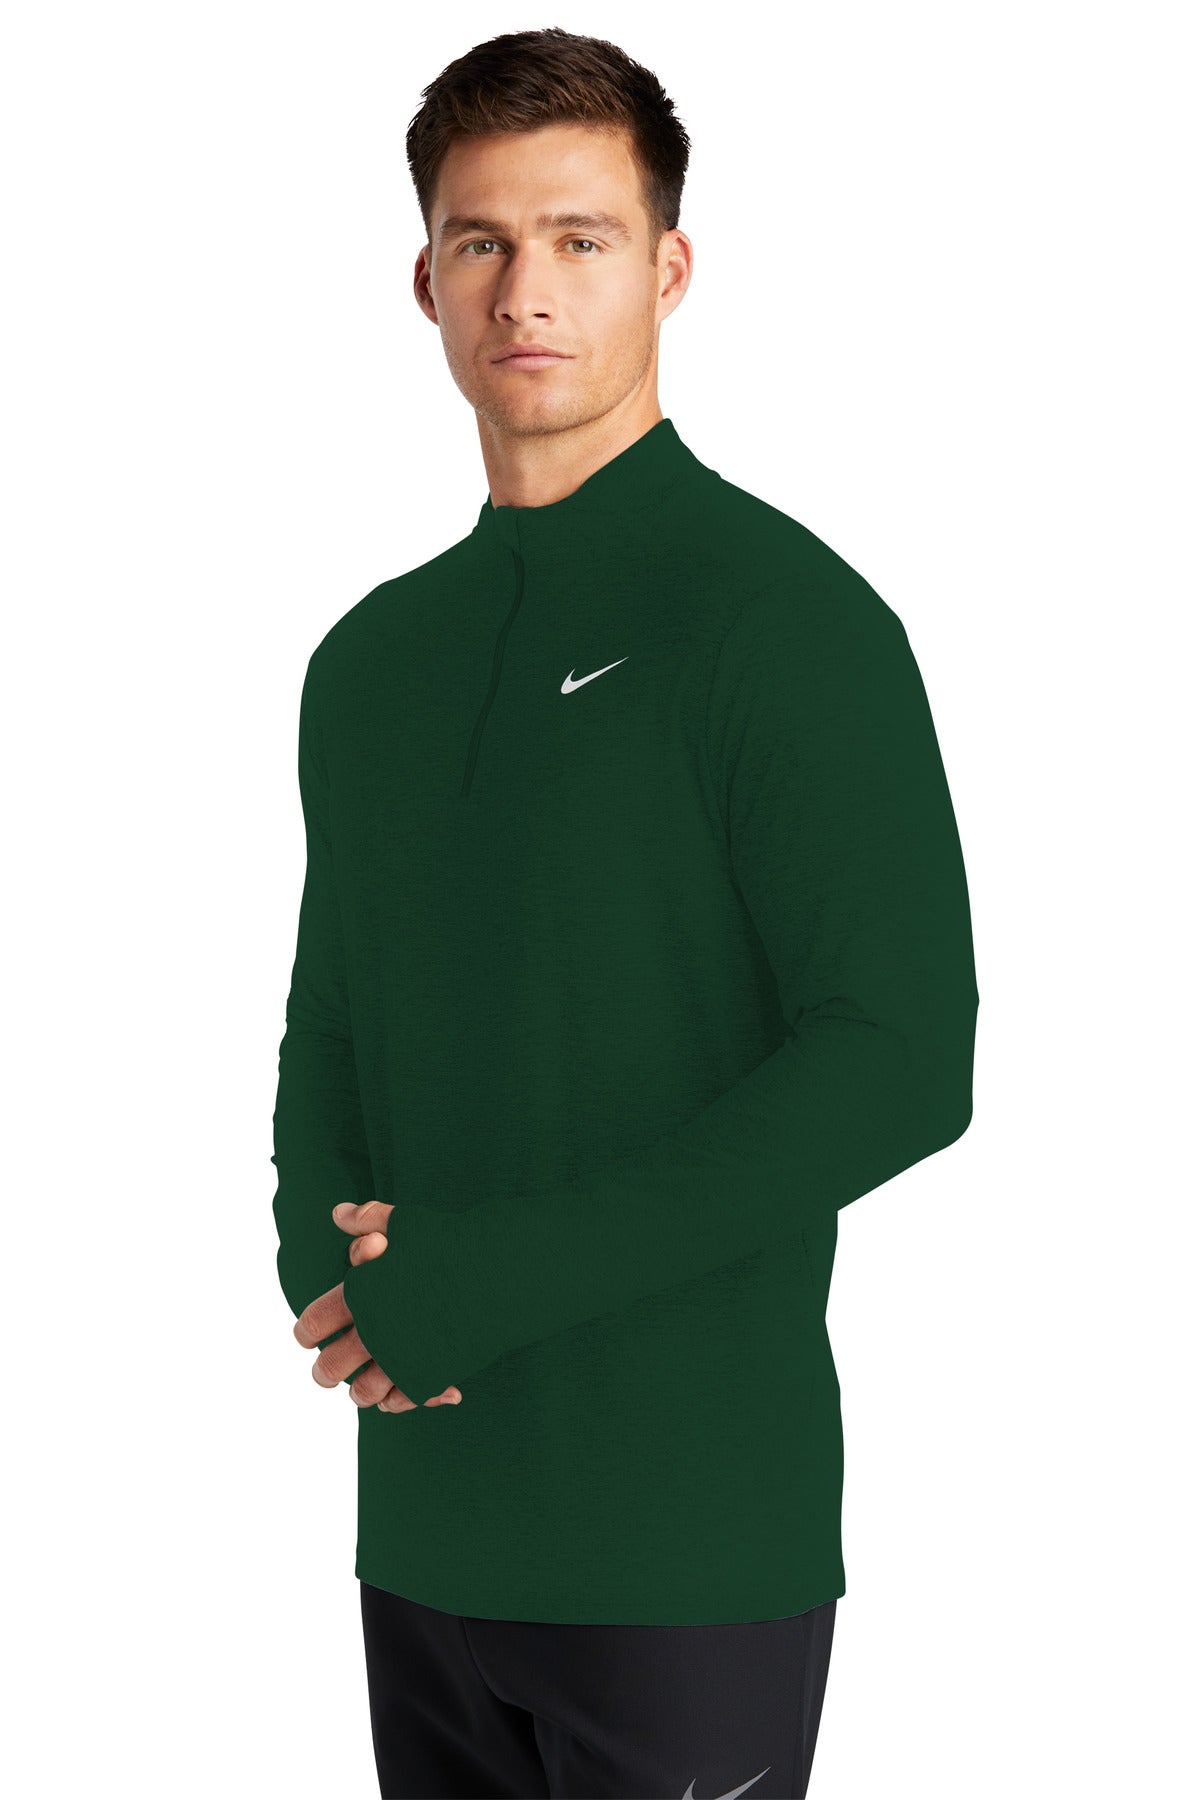 Nike Dri-FIT Element 1/2-Zip Top NKDH4949 - BT Imprintables Shirts